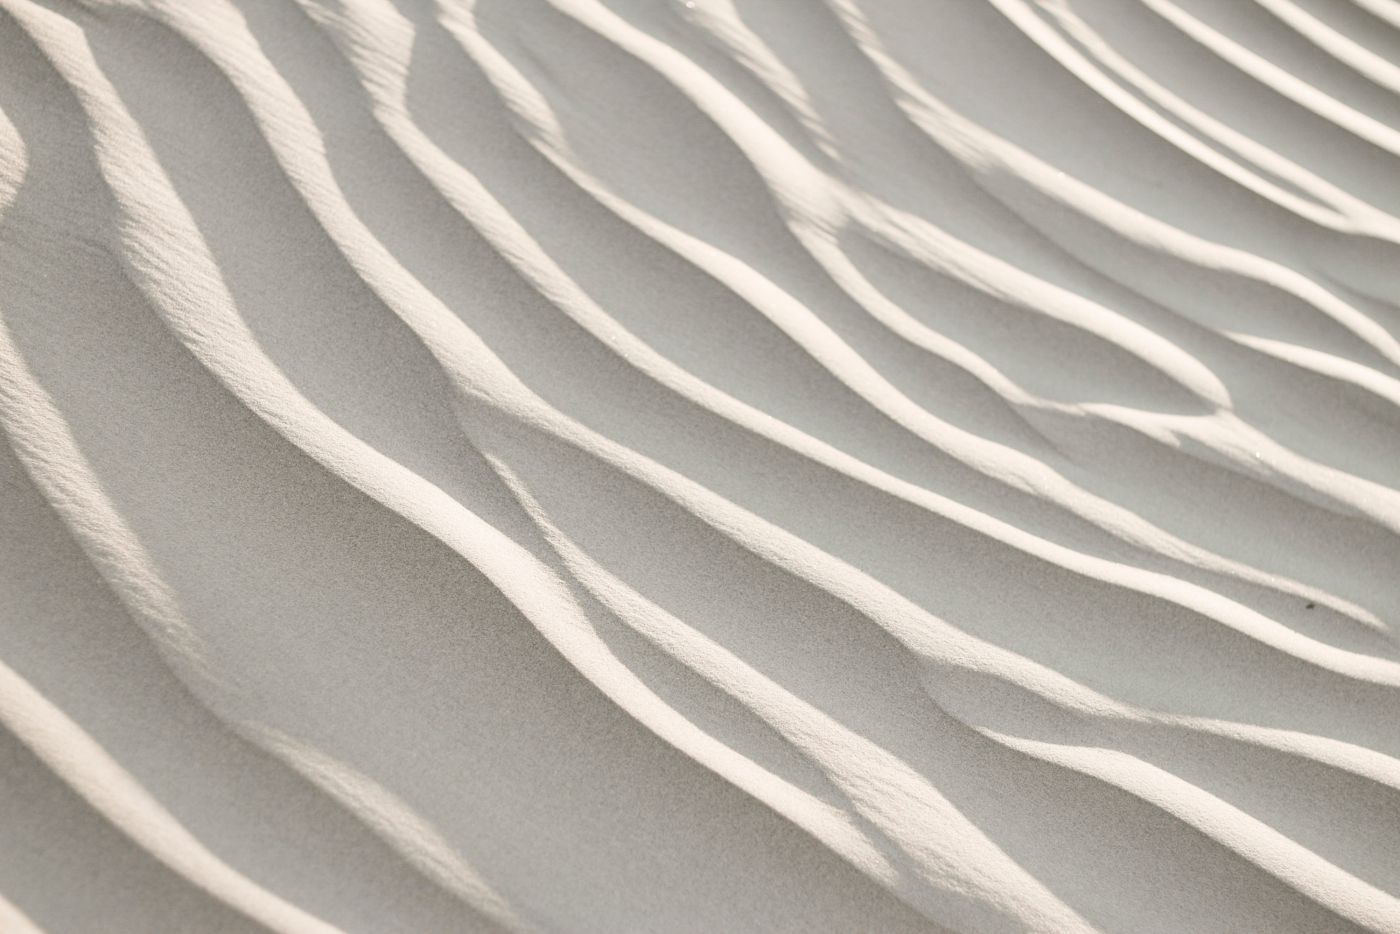 沙子背景纹理 免费图片 - Public Domain Pictures